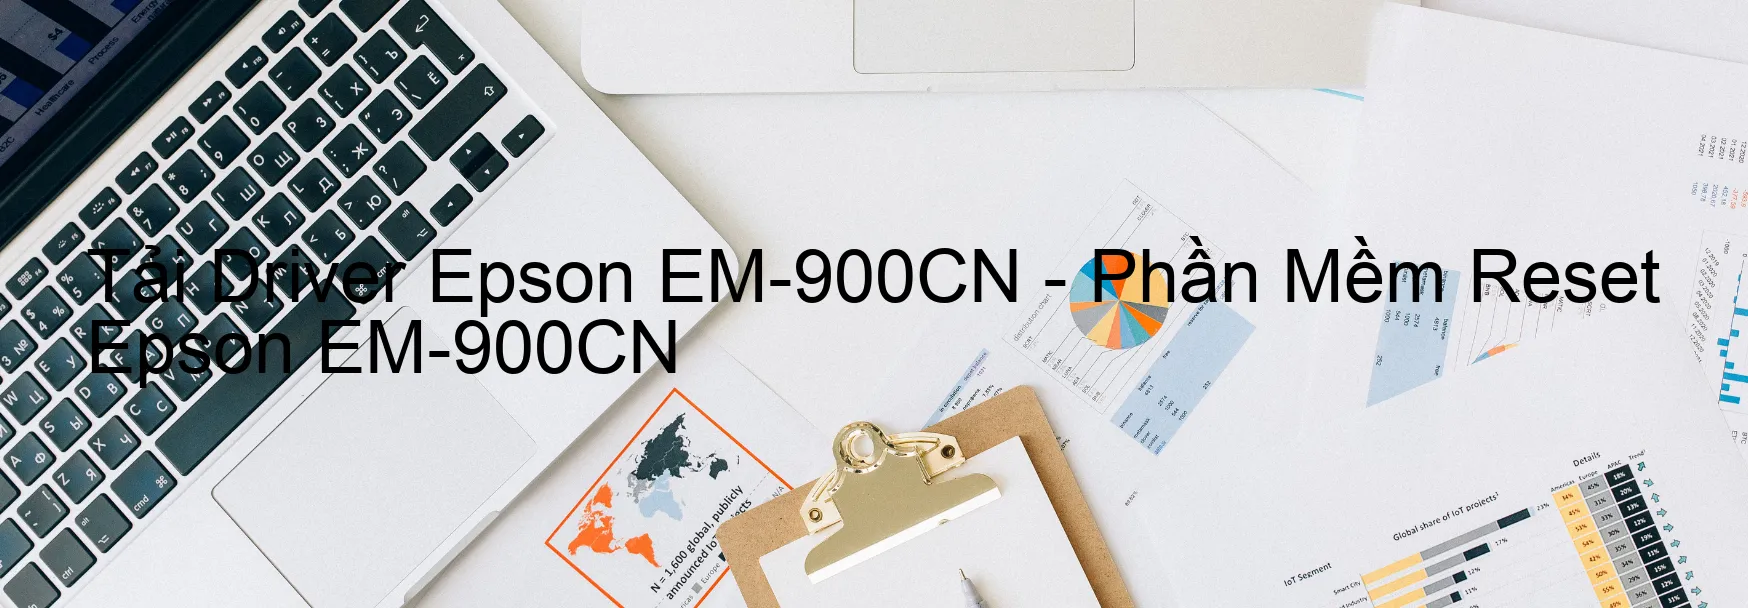 Driver Epson EM-900CN, Phần Mềm Reset Epson EM-900CN